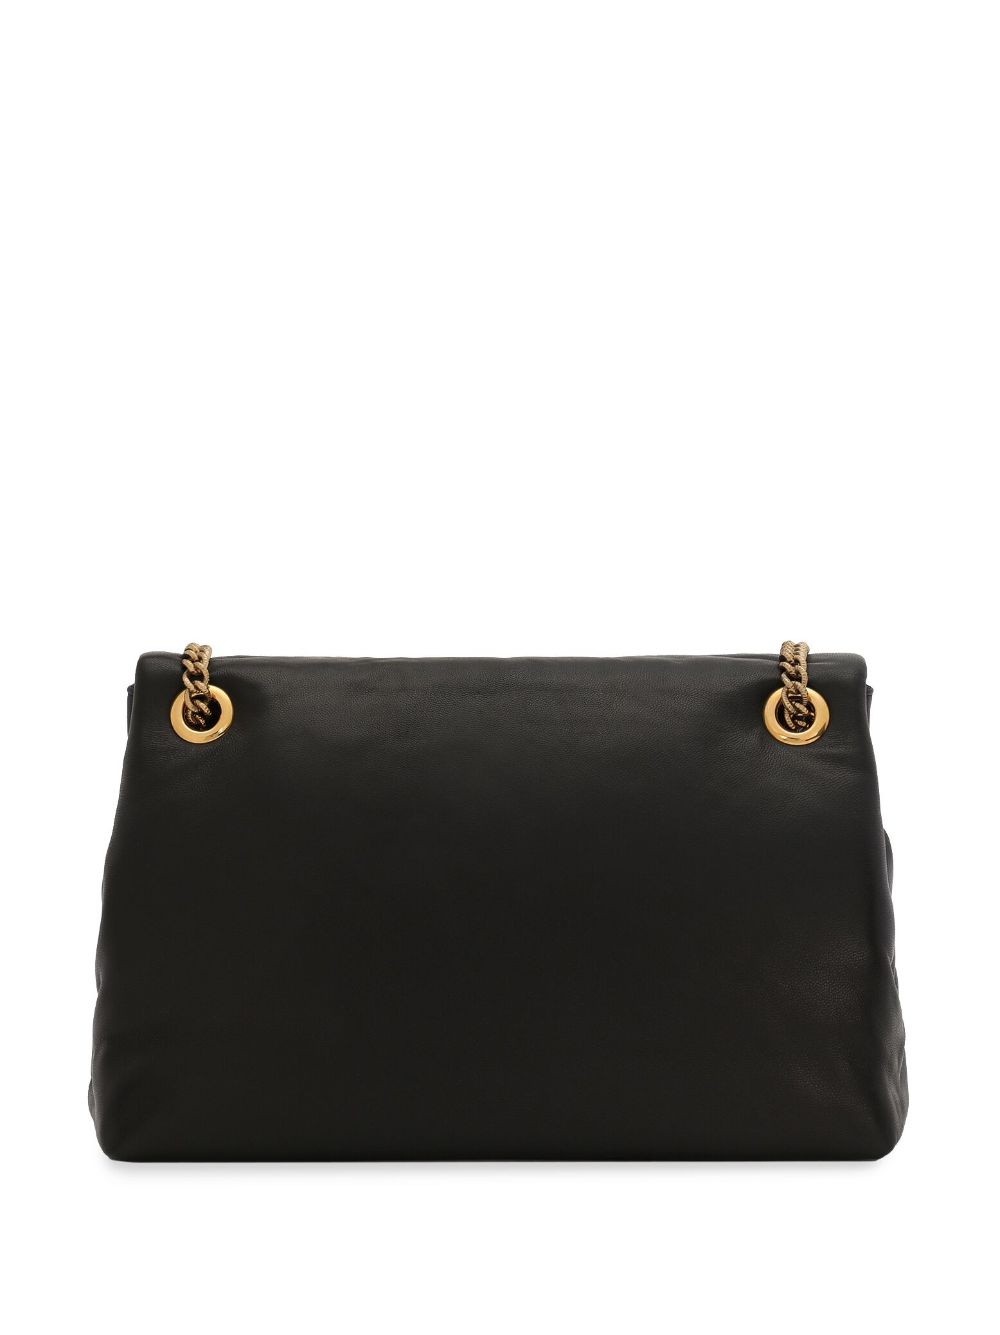 DOLCE & GABBANA Stylish Black Padded Leather Shoulder Handbag for Women